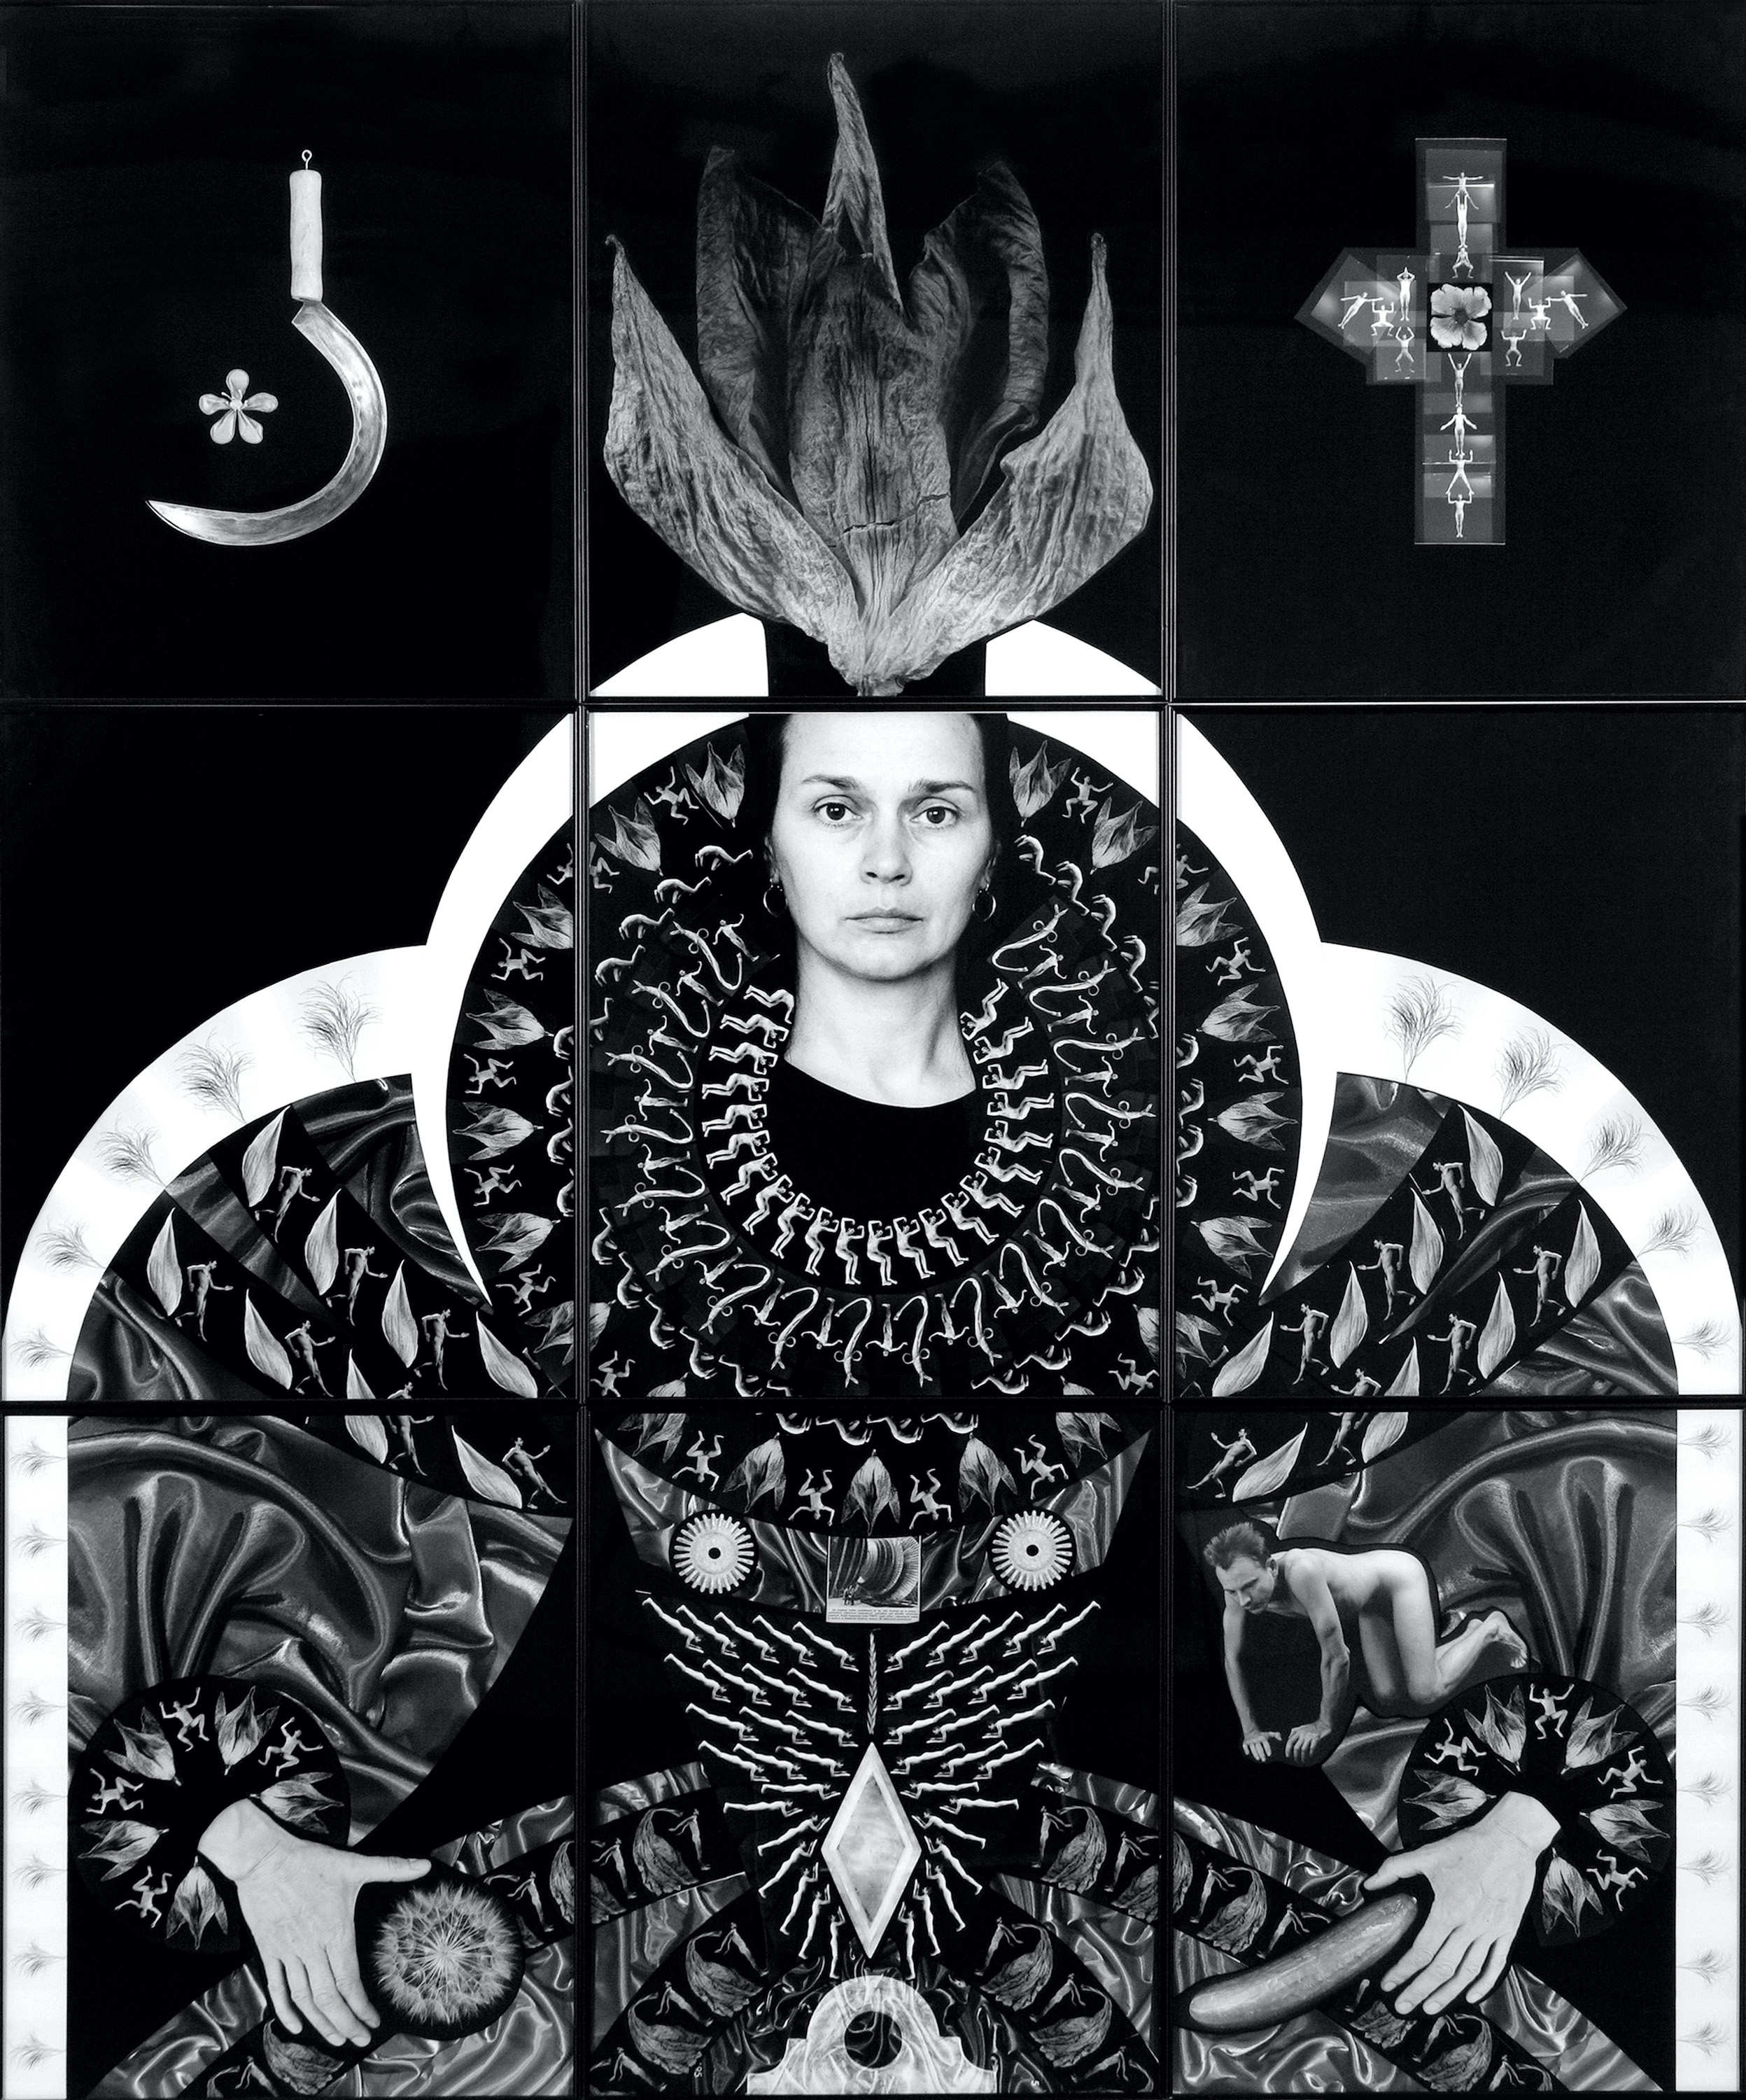 Lo splendore di Me stessa III by Zofia Kulik - 1997 - 182 x 152 cm 